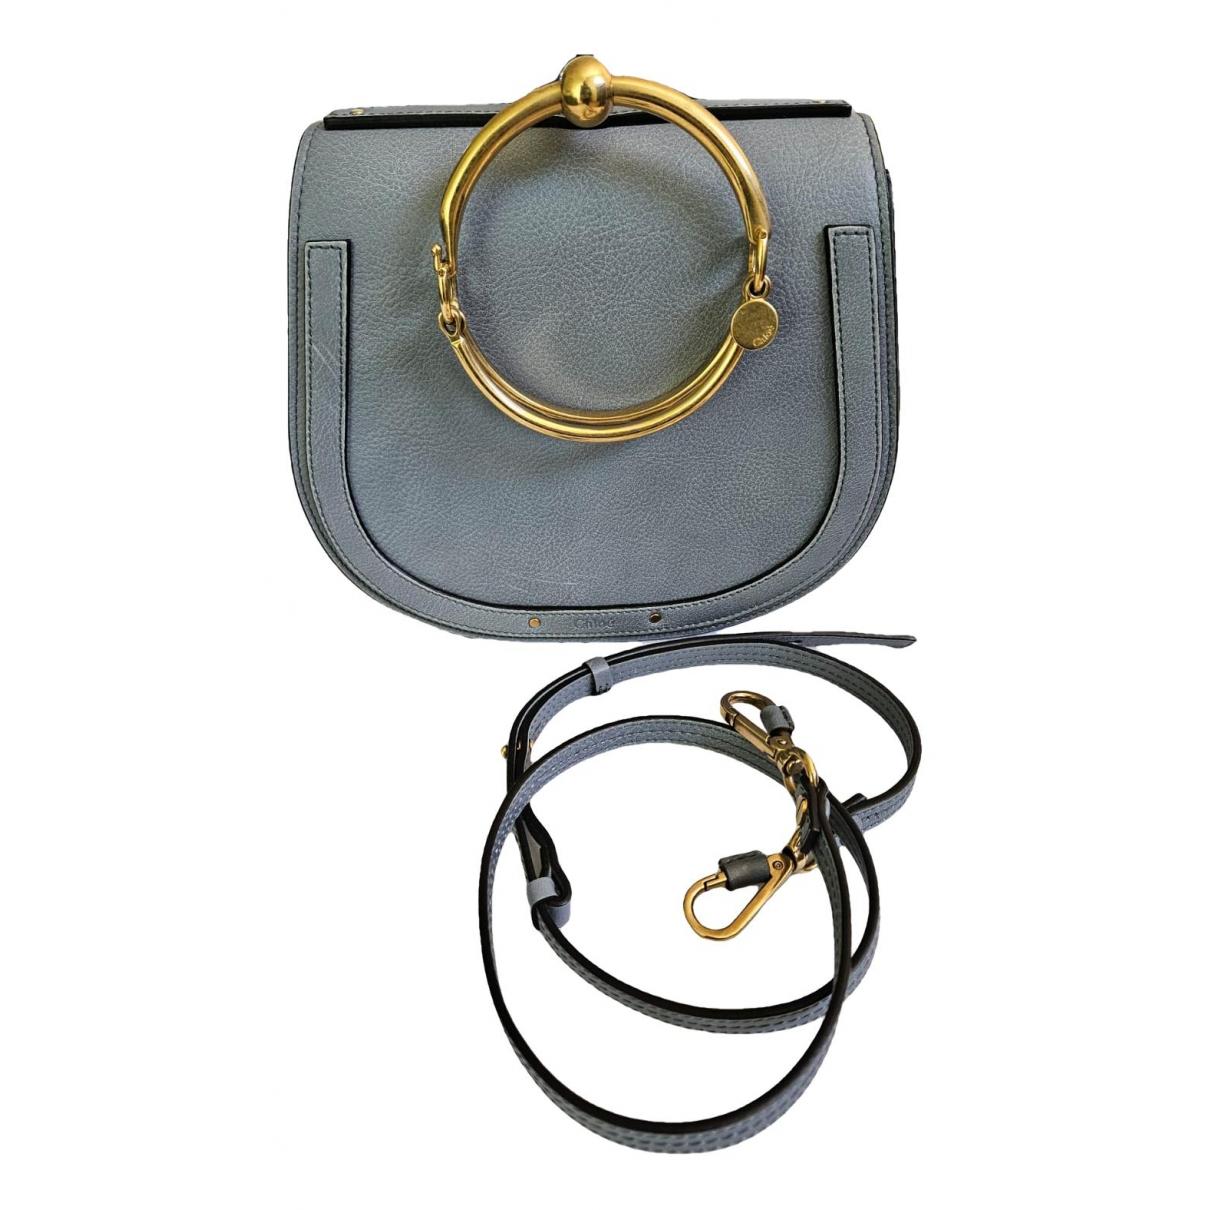 Bracelet nile leather handbag Chloé Black in Leather - 27741634